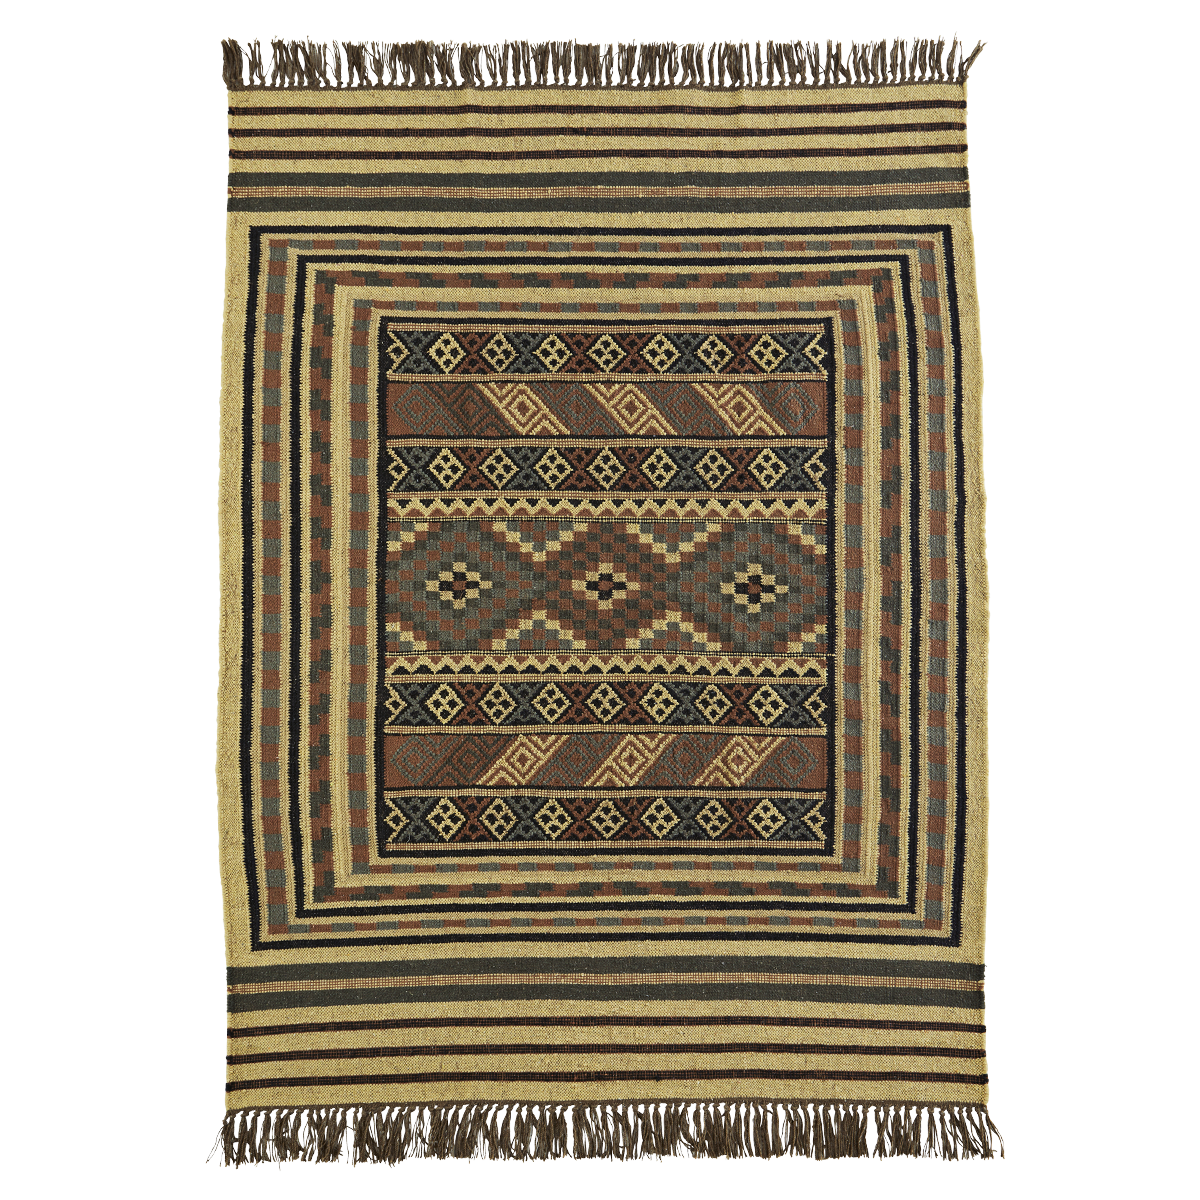 Woven cotton kelim rug